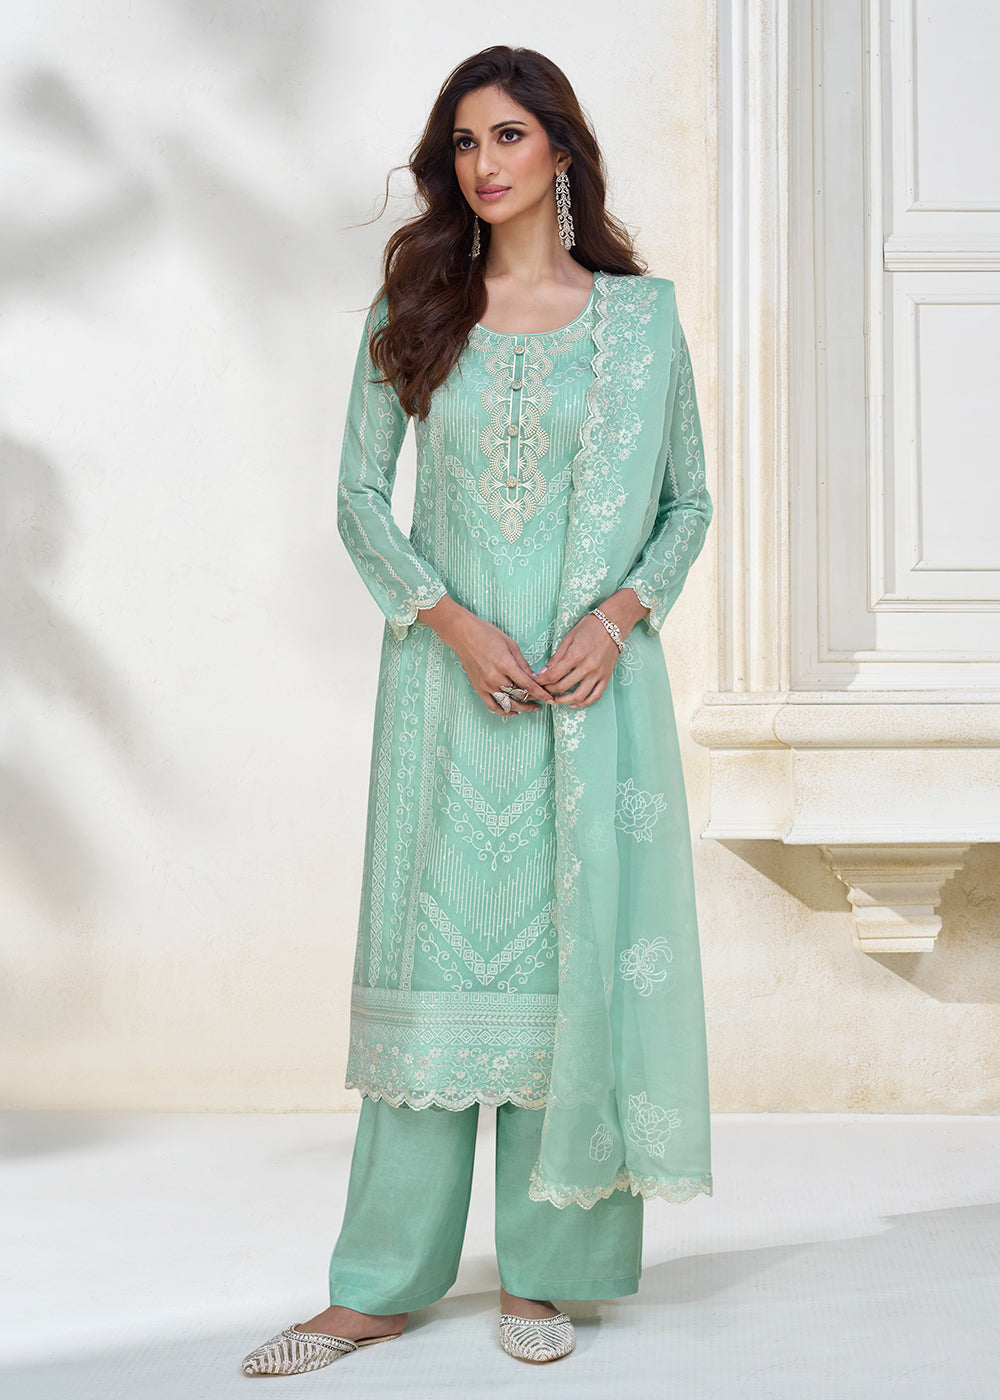 Buy Now Pastel Aqua Blue Organza Silk Designer Salwar Suit Online in USA, UK, Canada, Germany, Australia & Worldwide at Empress Clothing. 